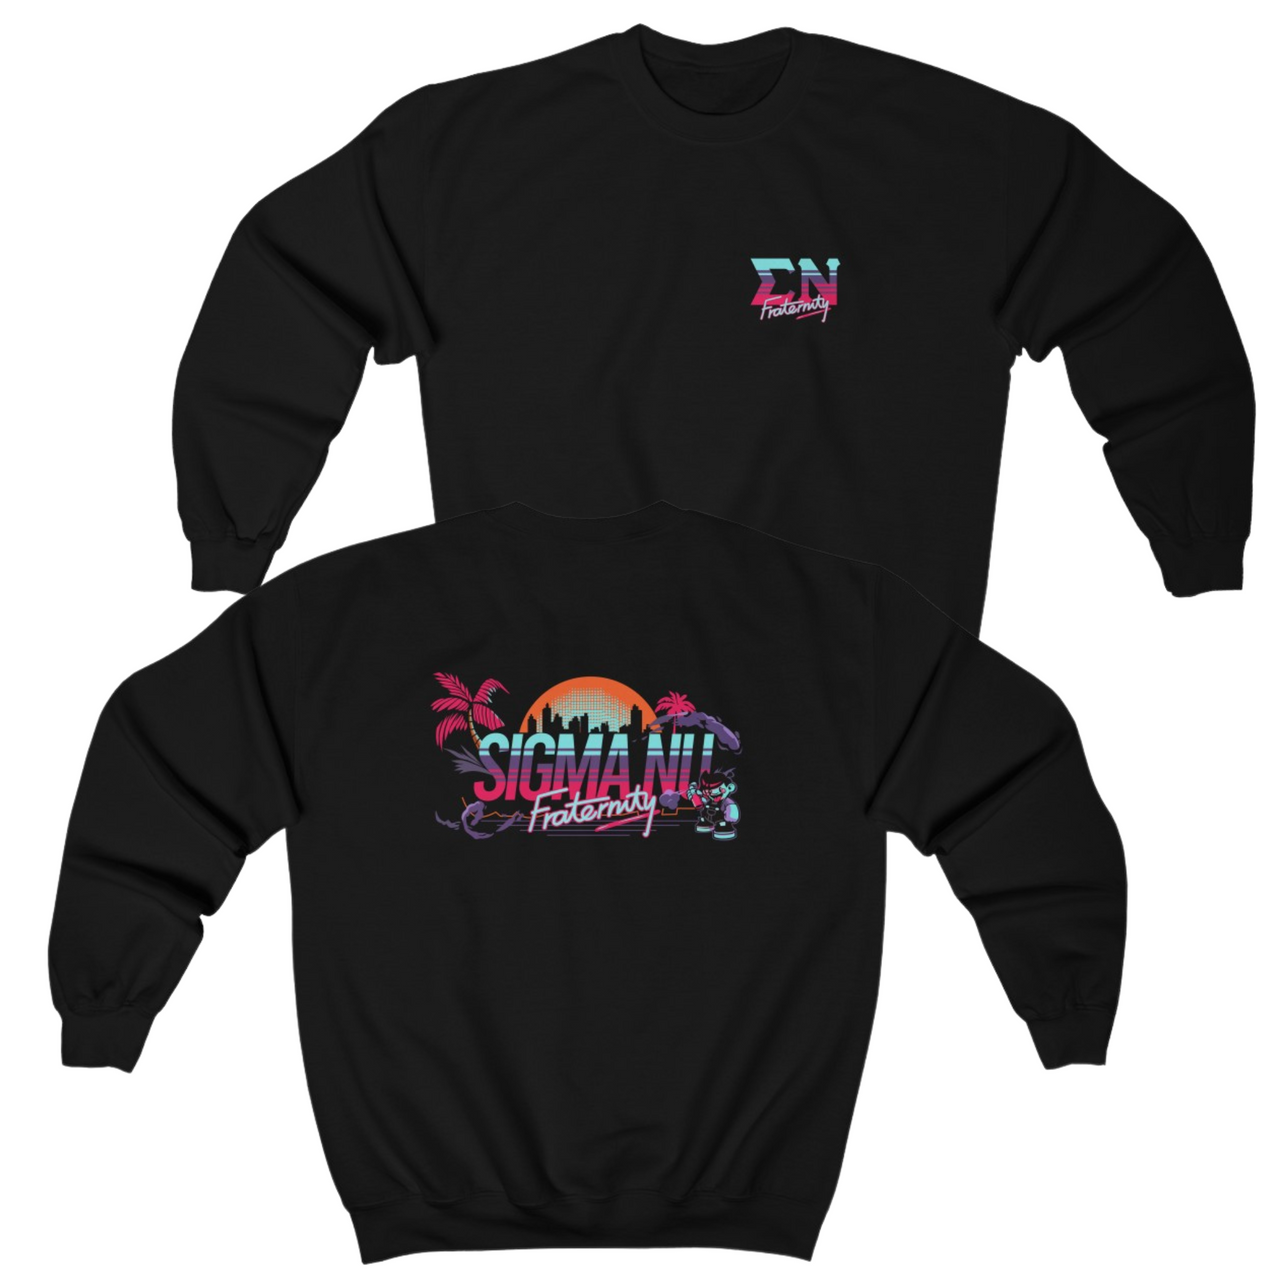 Black Sigma Nu Graphic Crewneck Sweatshirt | Jump Street | Sigma Nu Clothing, Apparel and Merchandise